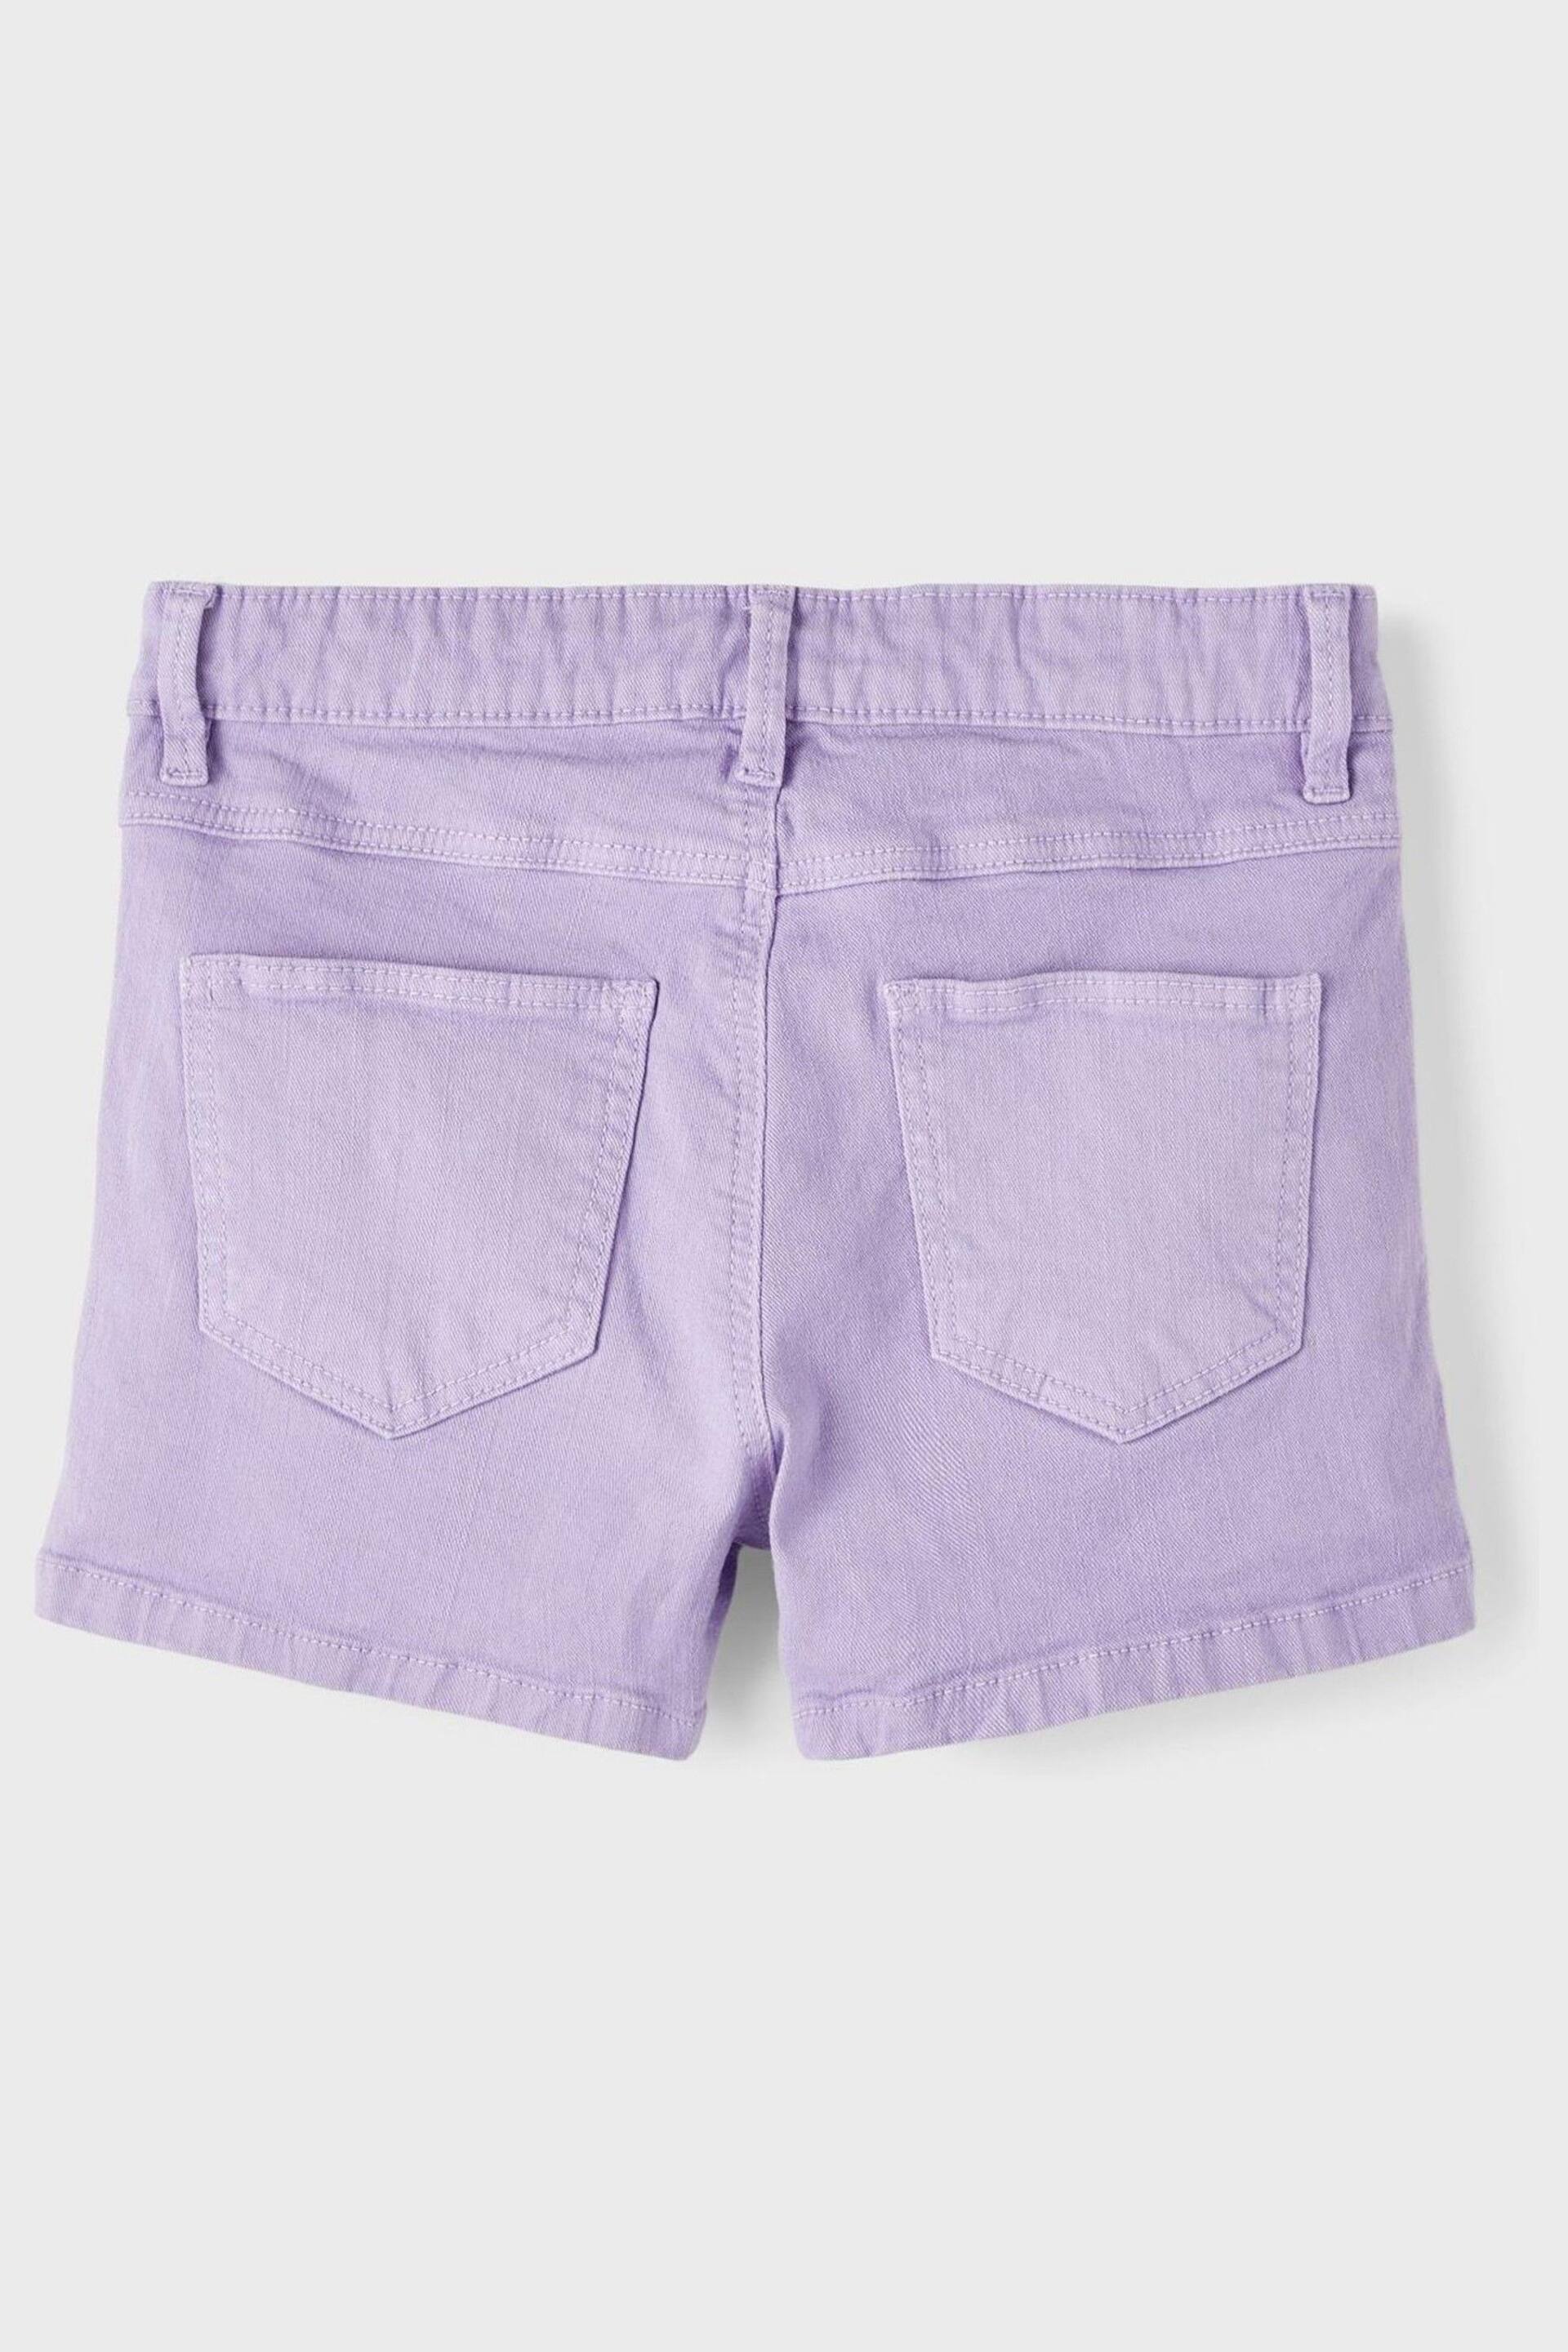 Name It Purple Twist Shorts - Image 4 of 4